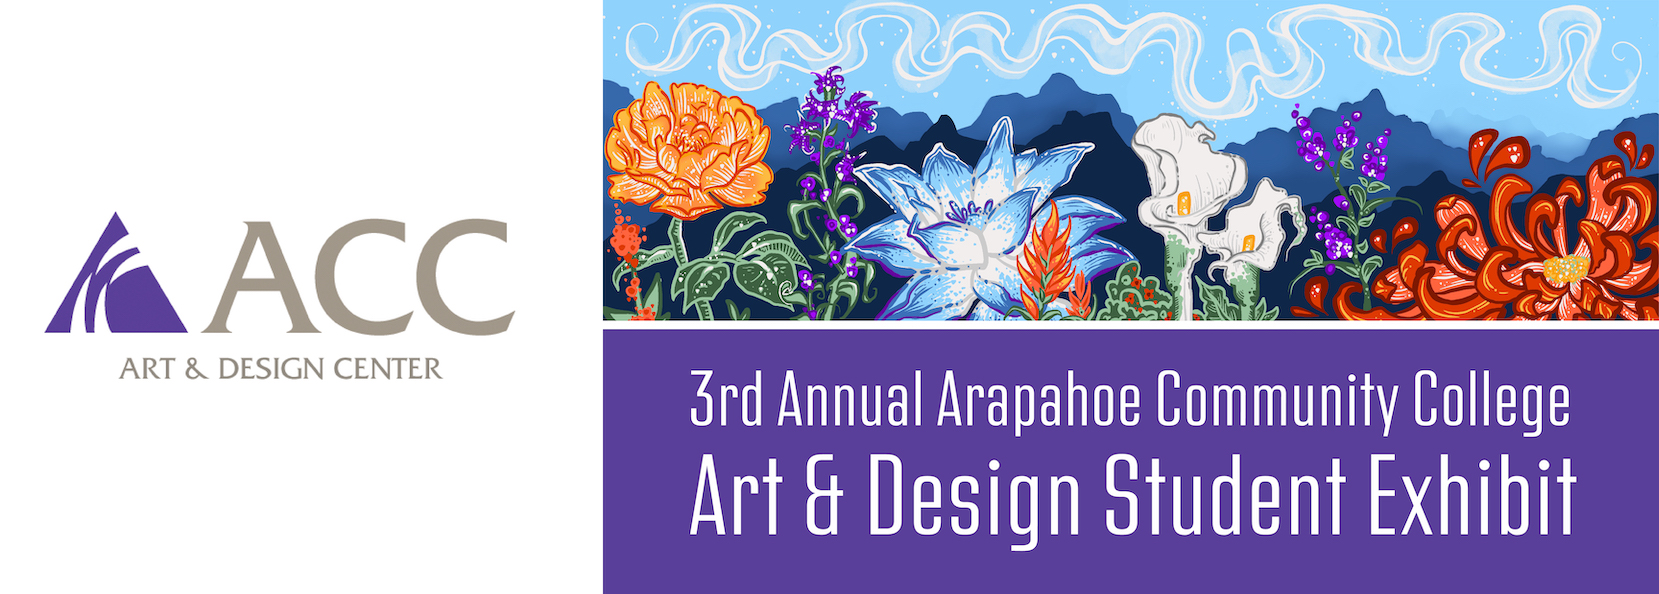 Arapahoe Community Art & Design Student Exhibit.